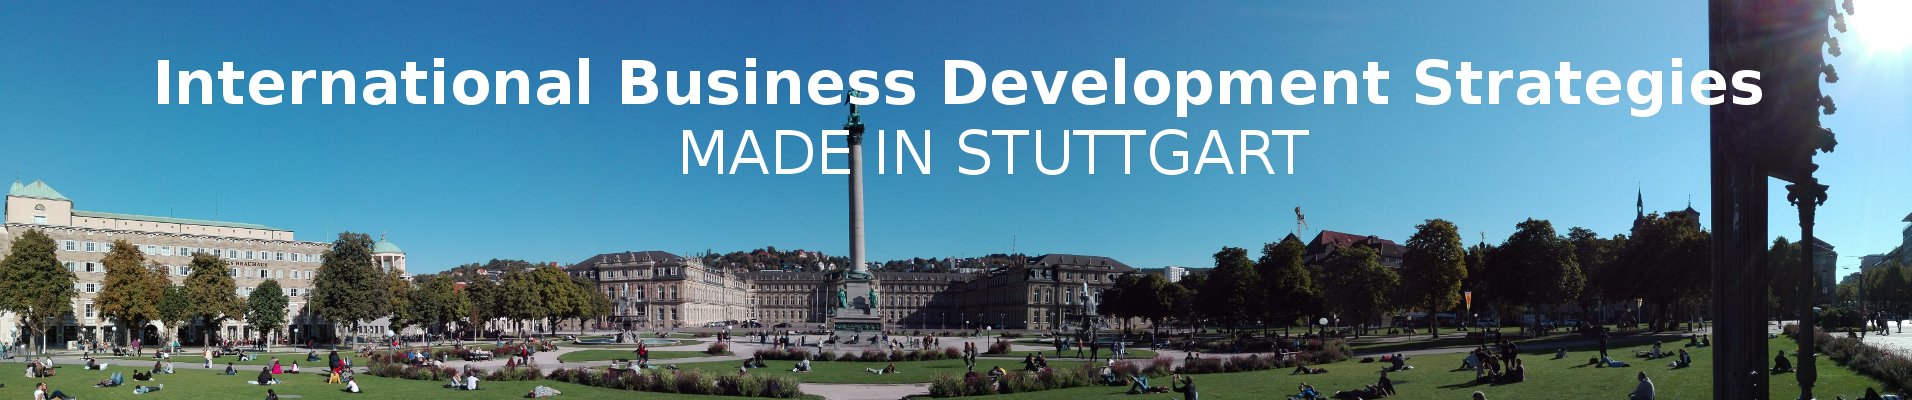 Nebra_Consulting_International_Business_Development_Strategy_Design_Made_In_Stuttgart_Germany.jpg